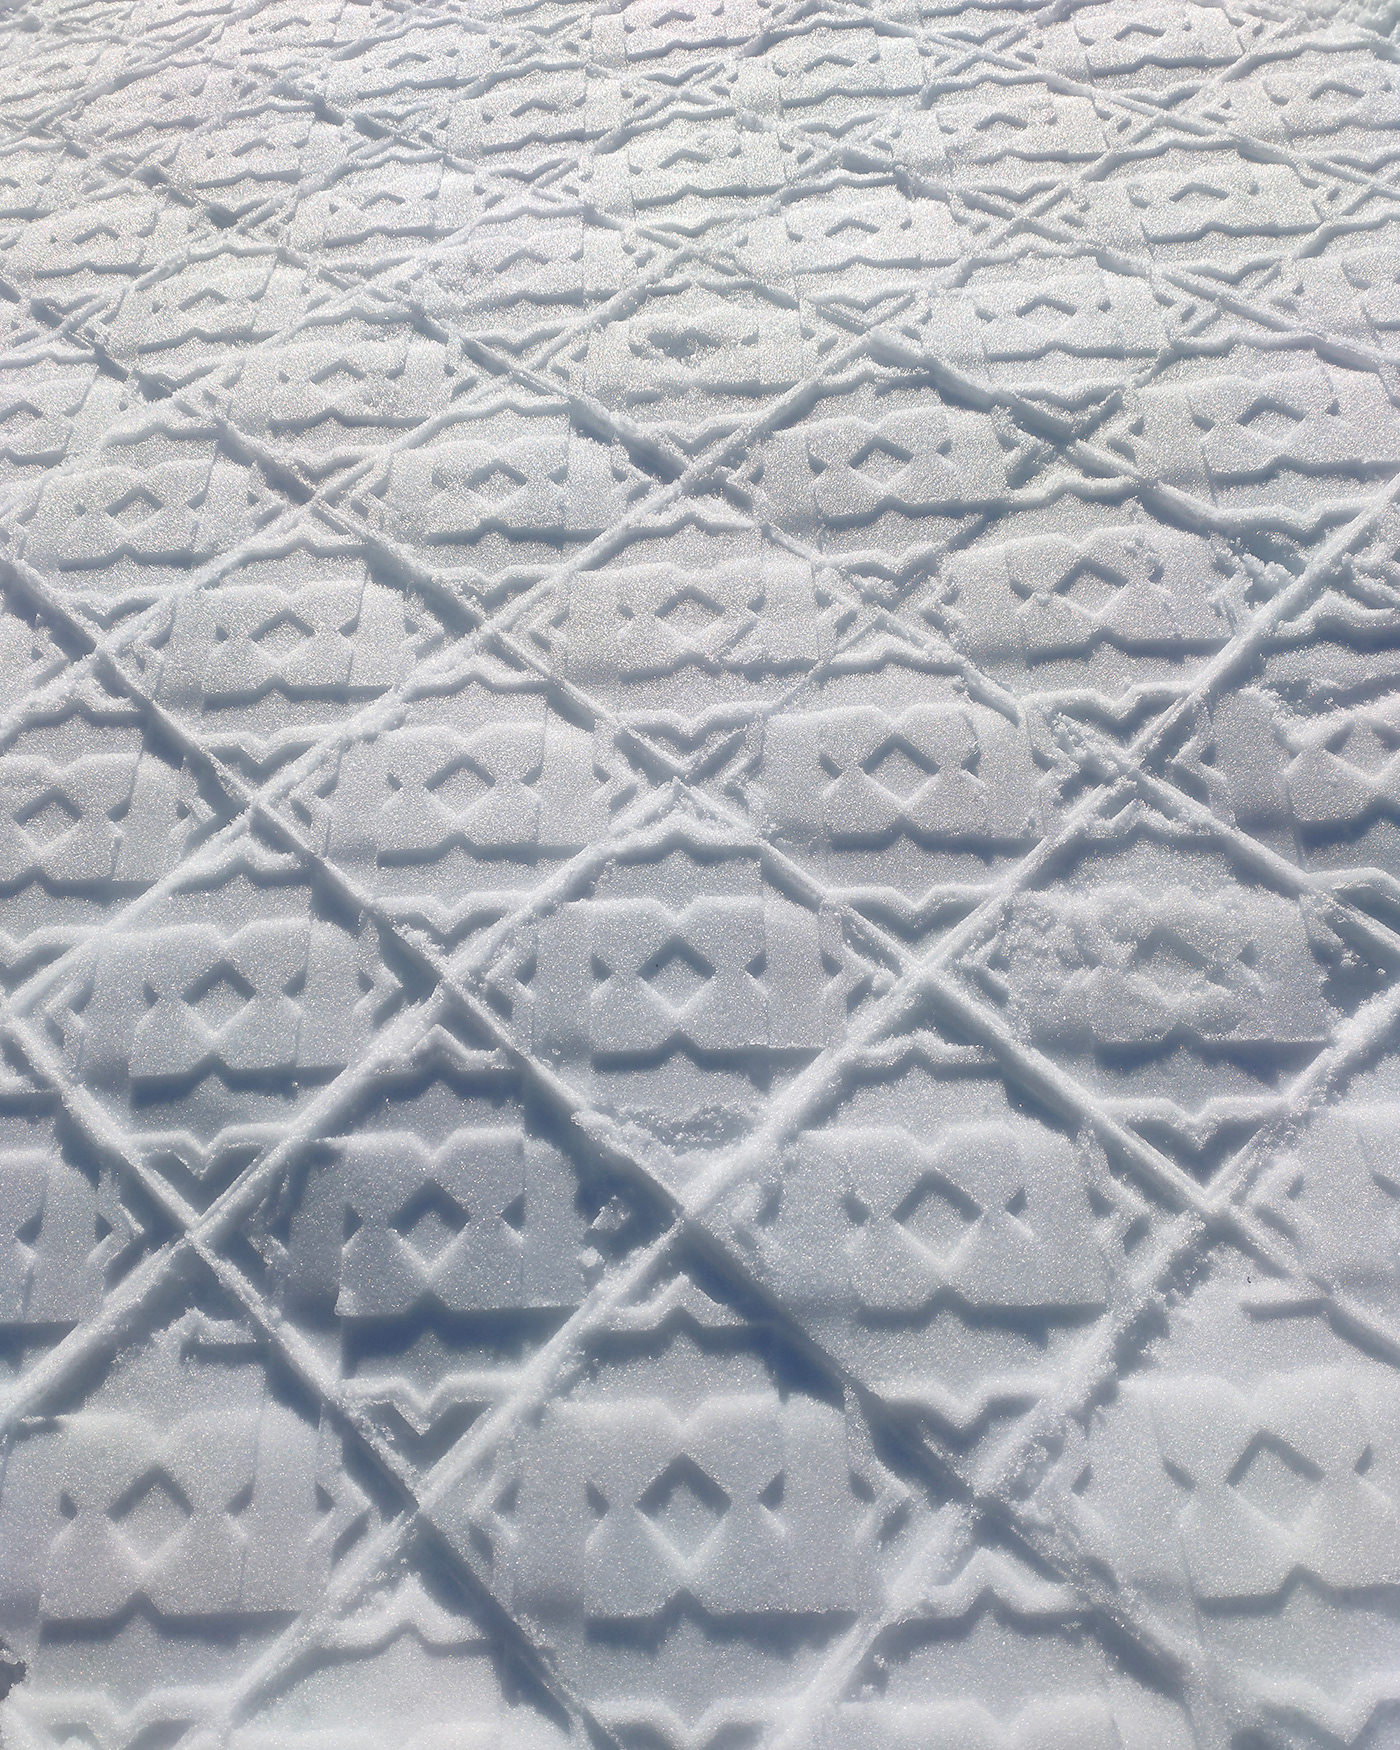 FLOOR land art pattern sculpture snow tiles